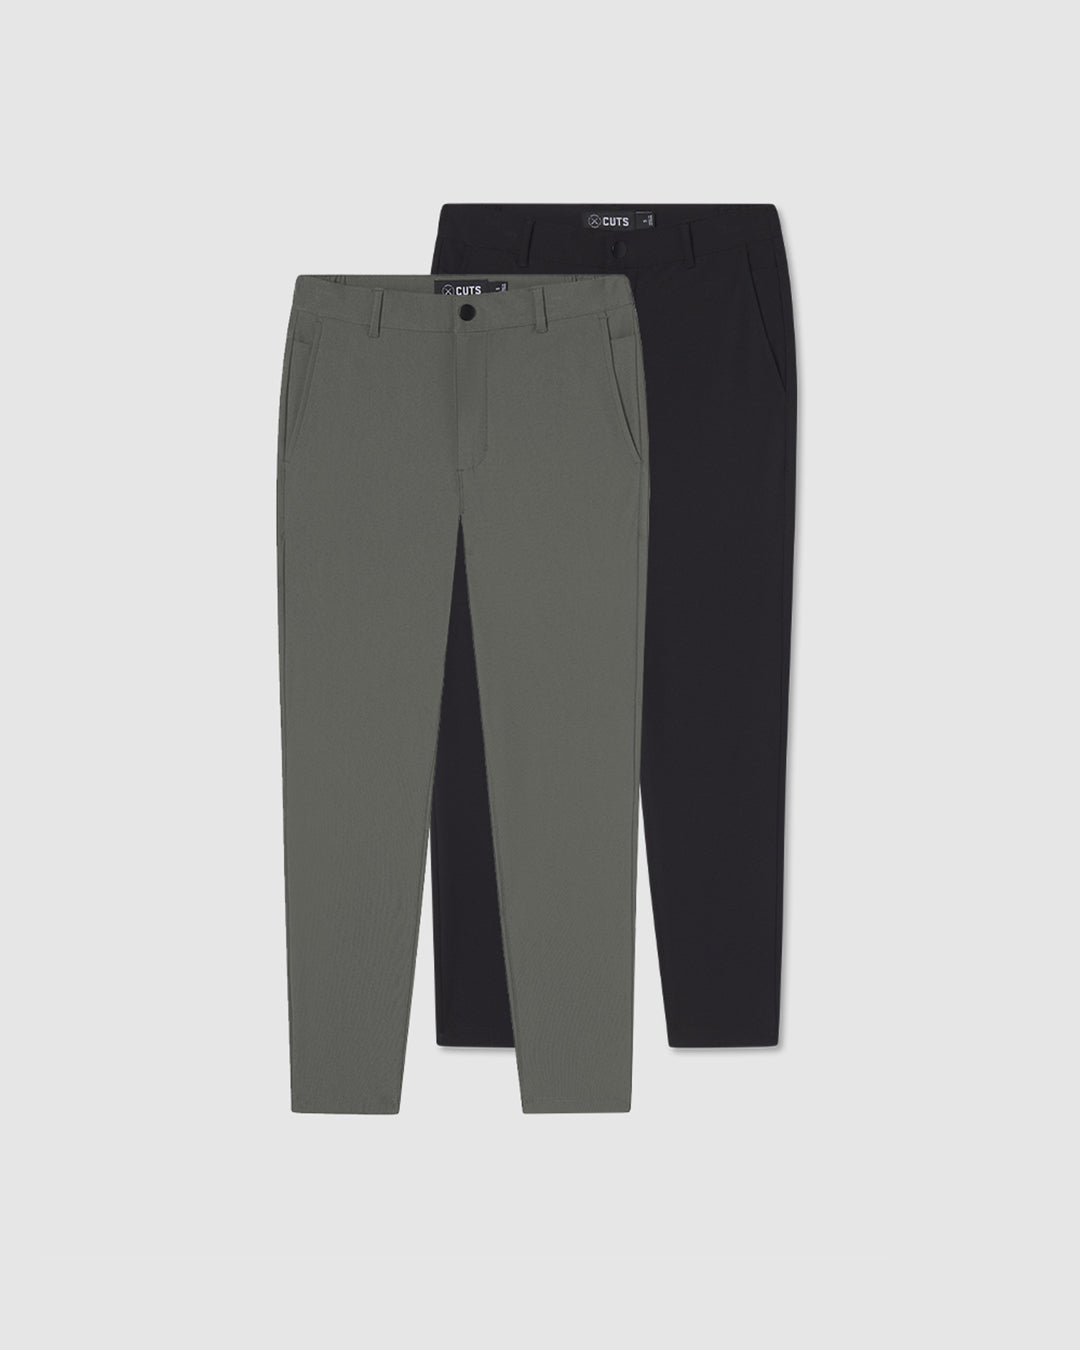  Kit flat lay product photos - One black long sleeve, green sherpa, and dark tan pants 